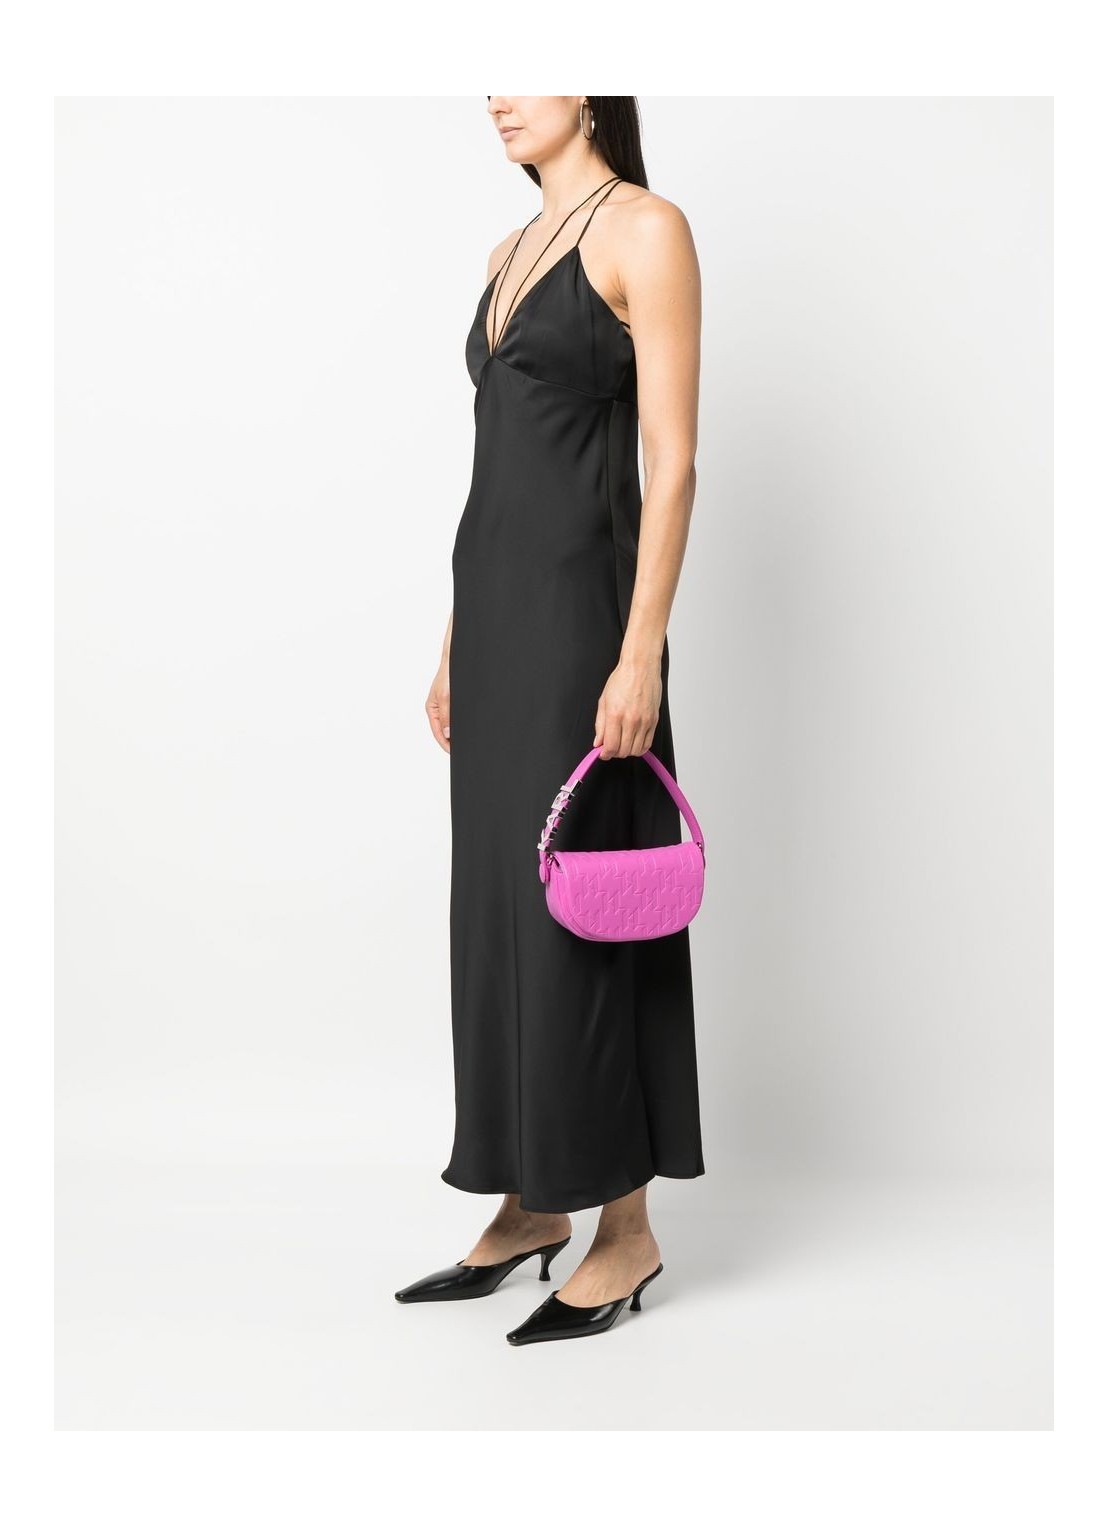 Karl Lagerfeld 'k/swing Sm Baguette' Handbag in Purple